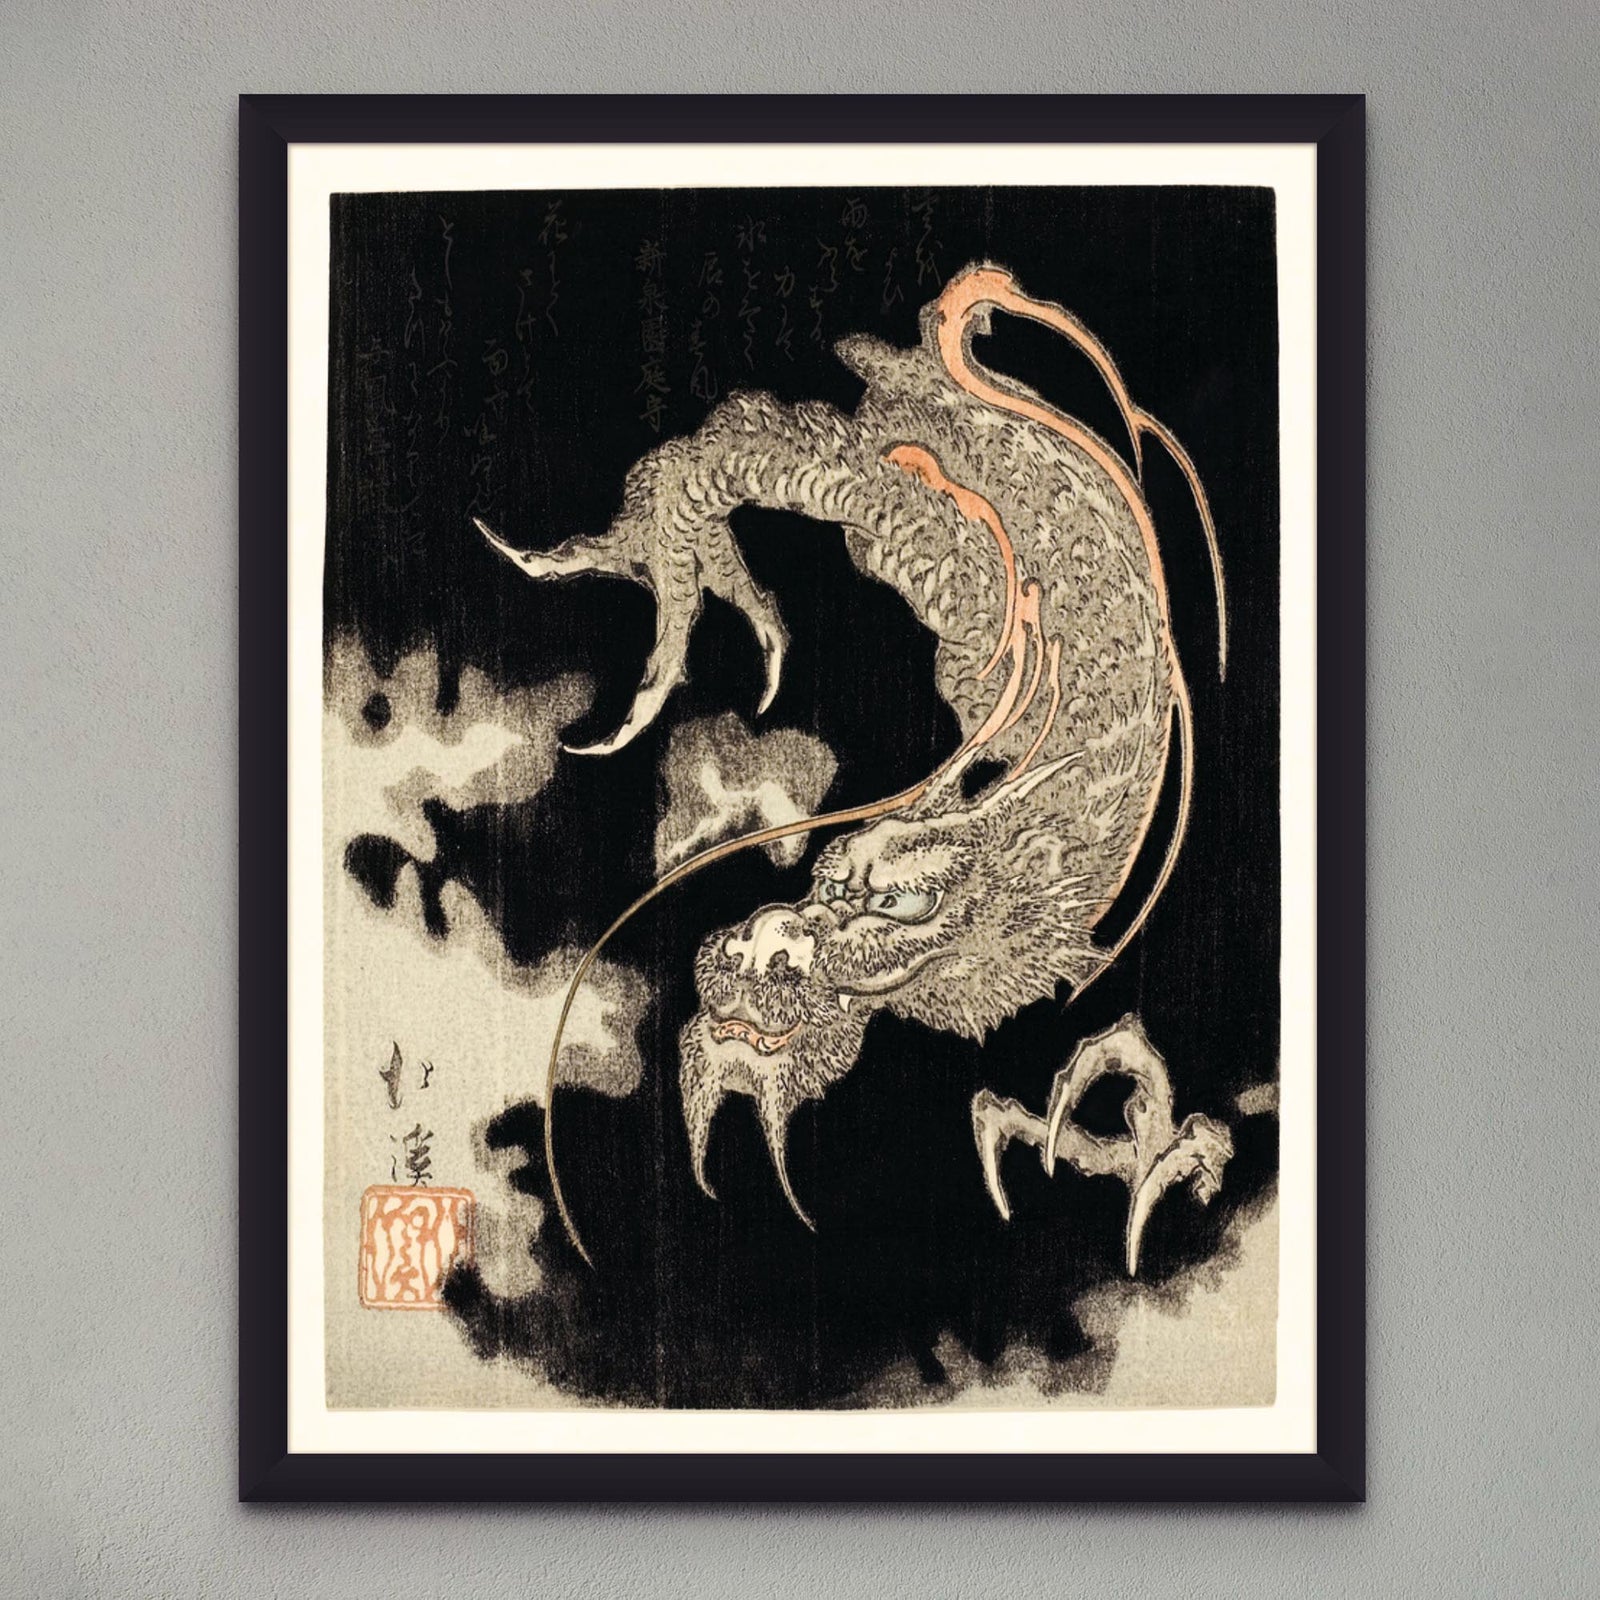 giclee 8"x10" Storm Dragon Against a Black Sky with Clouds and Poems, Totoya Hokkei Japanese Edo Yokai Mythology Vintage Boho Wall Decor Fine Art Print